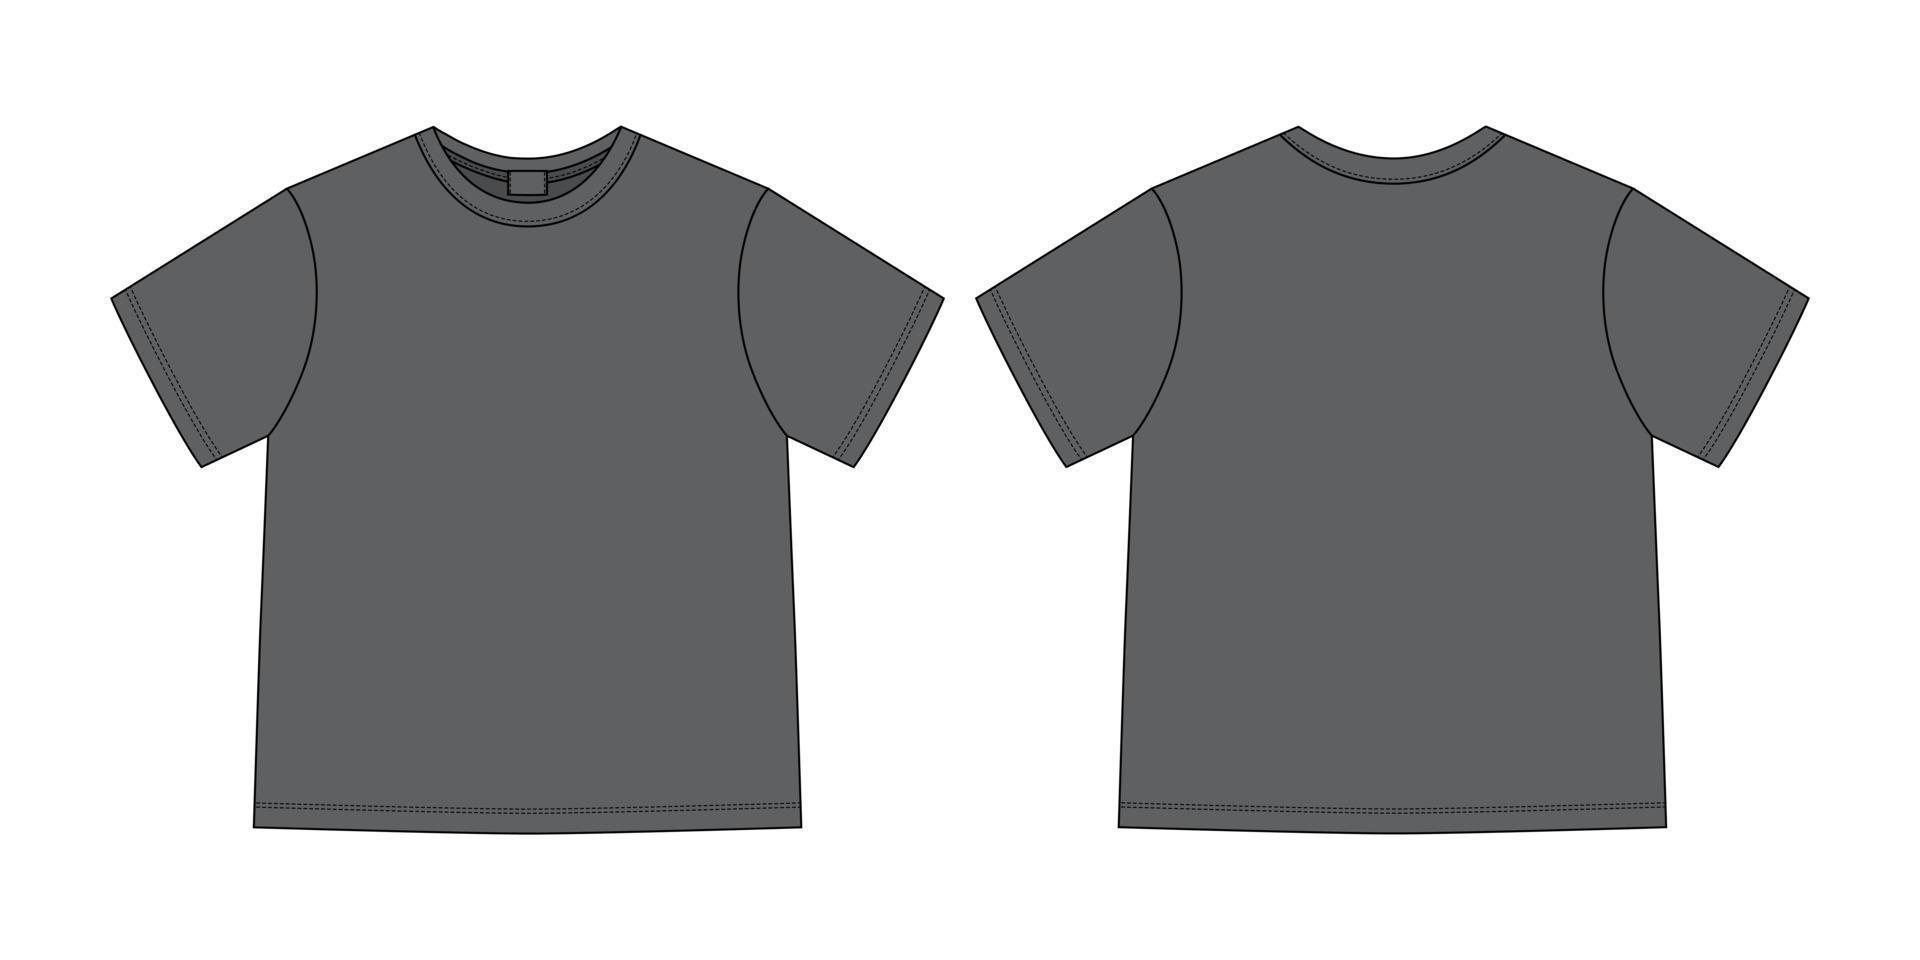 Grey outlines on my shirt - Art Design Support - Developer Forum